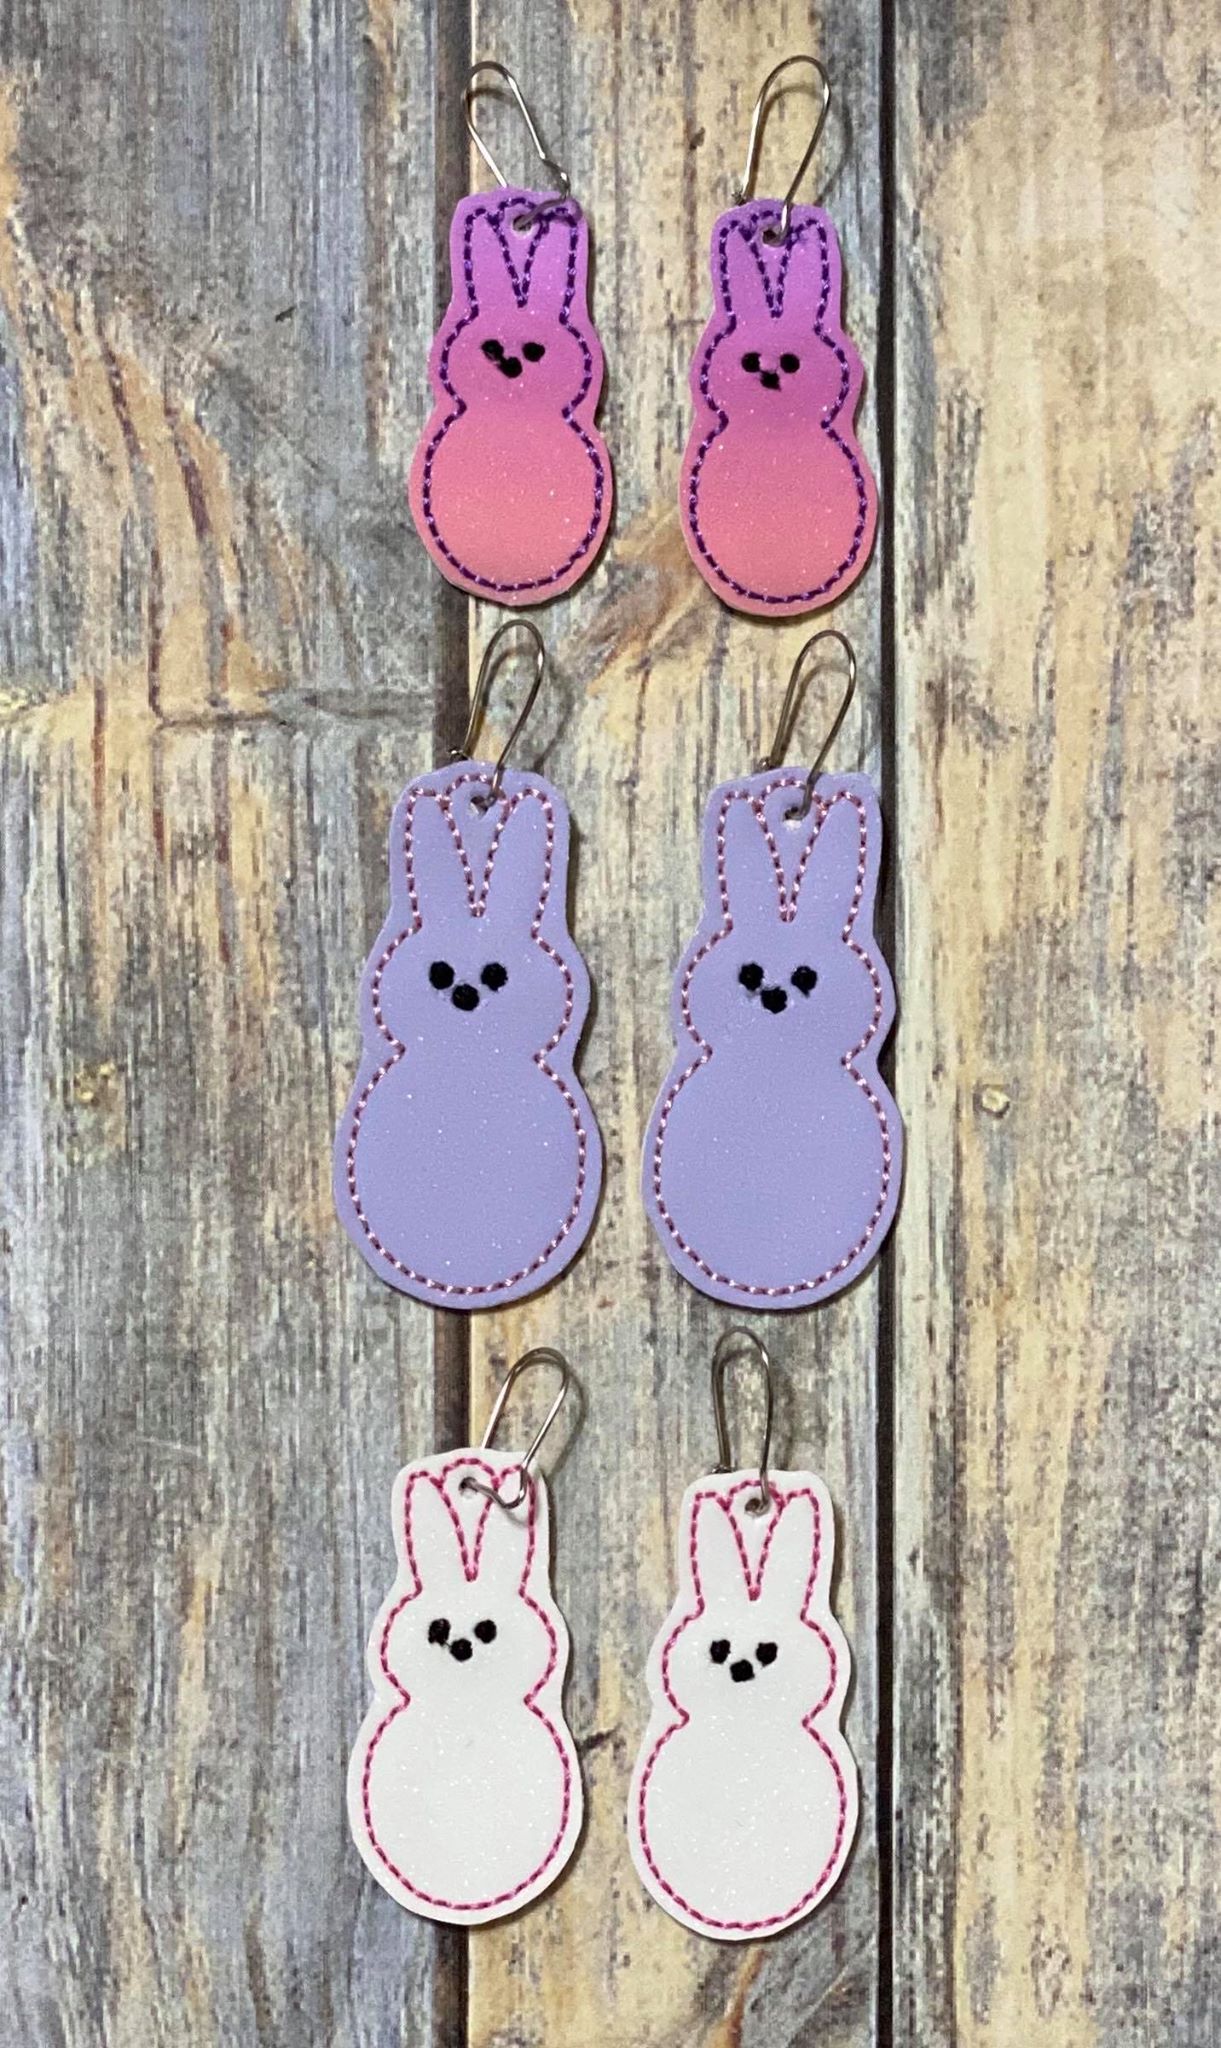 Marshmallow Easter Earrings - 3 sizes - Digital Embroidery Design